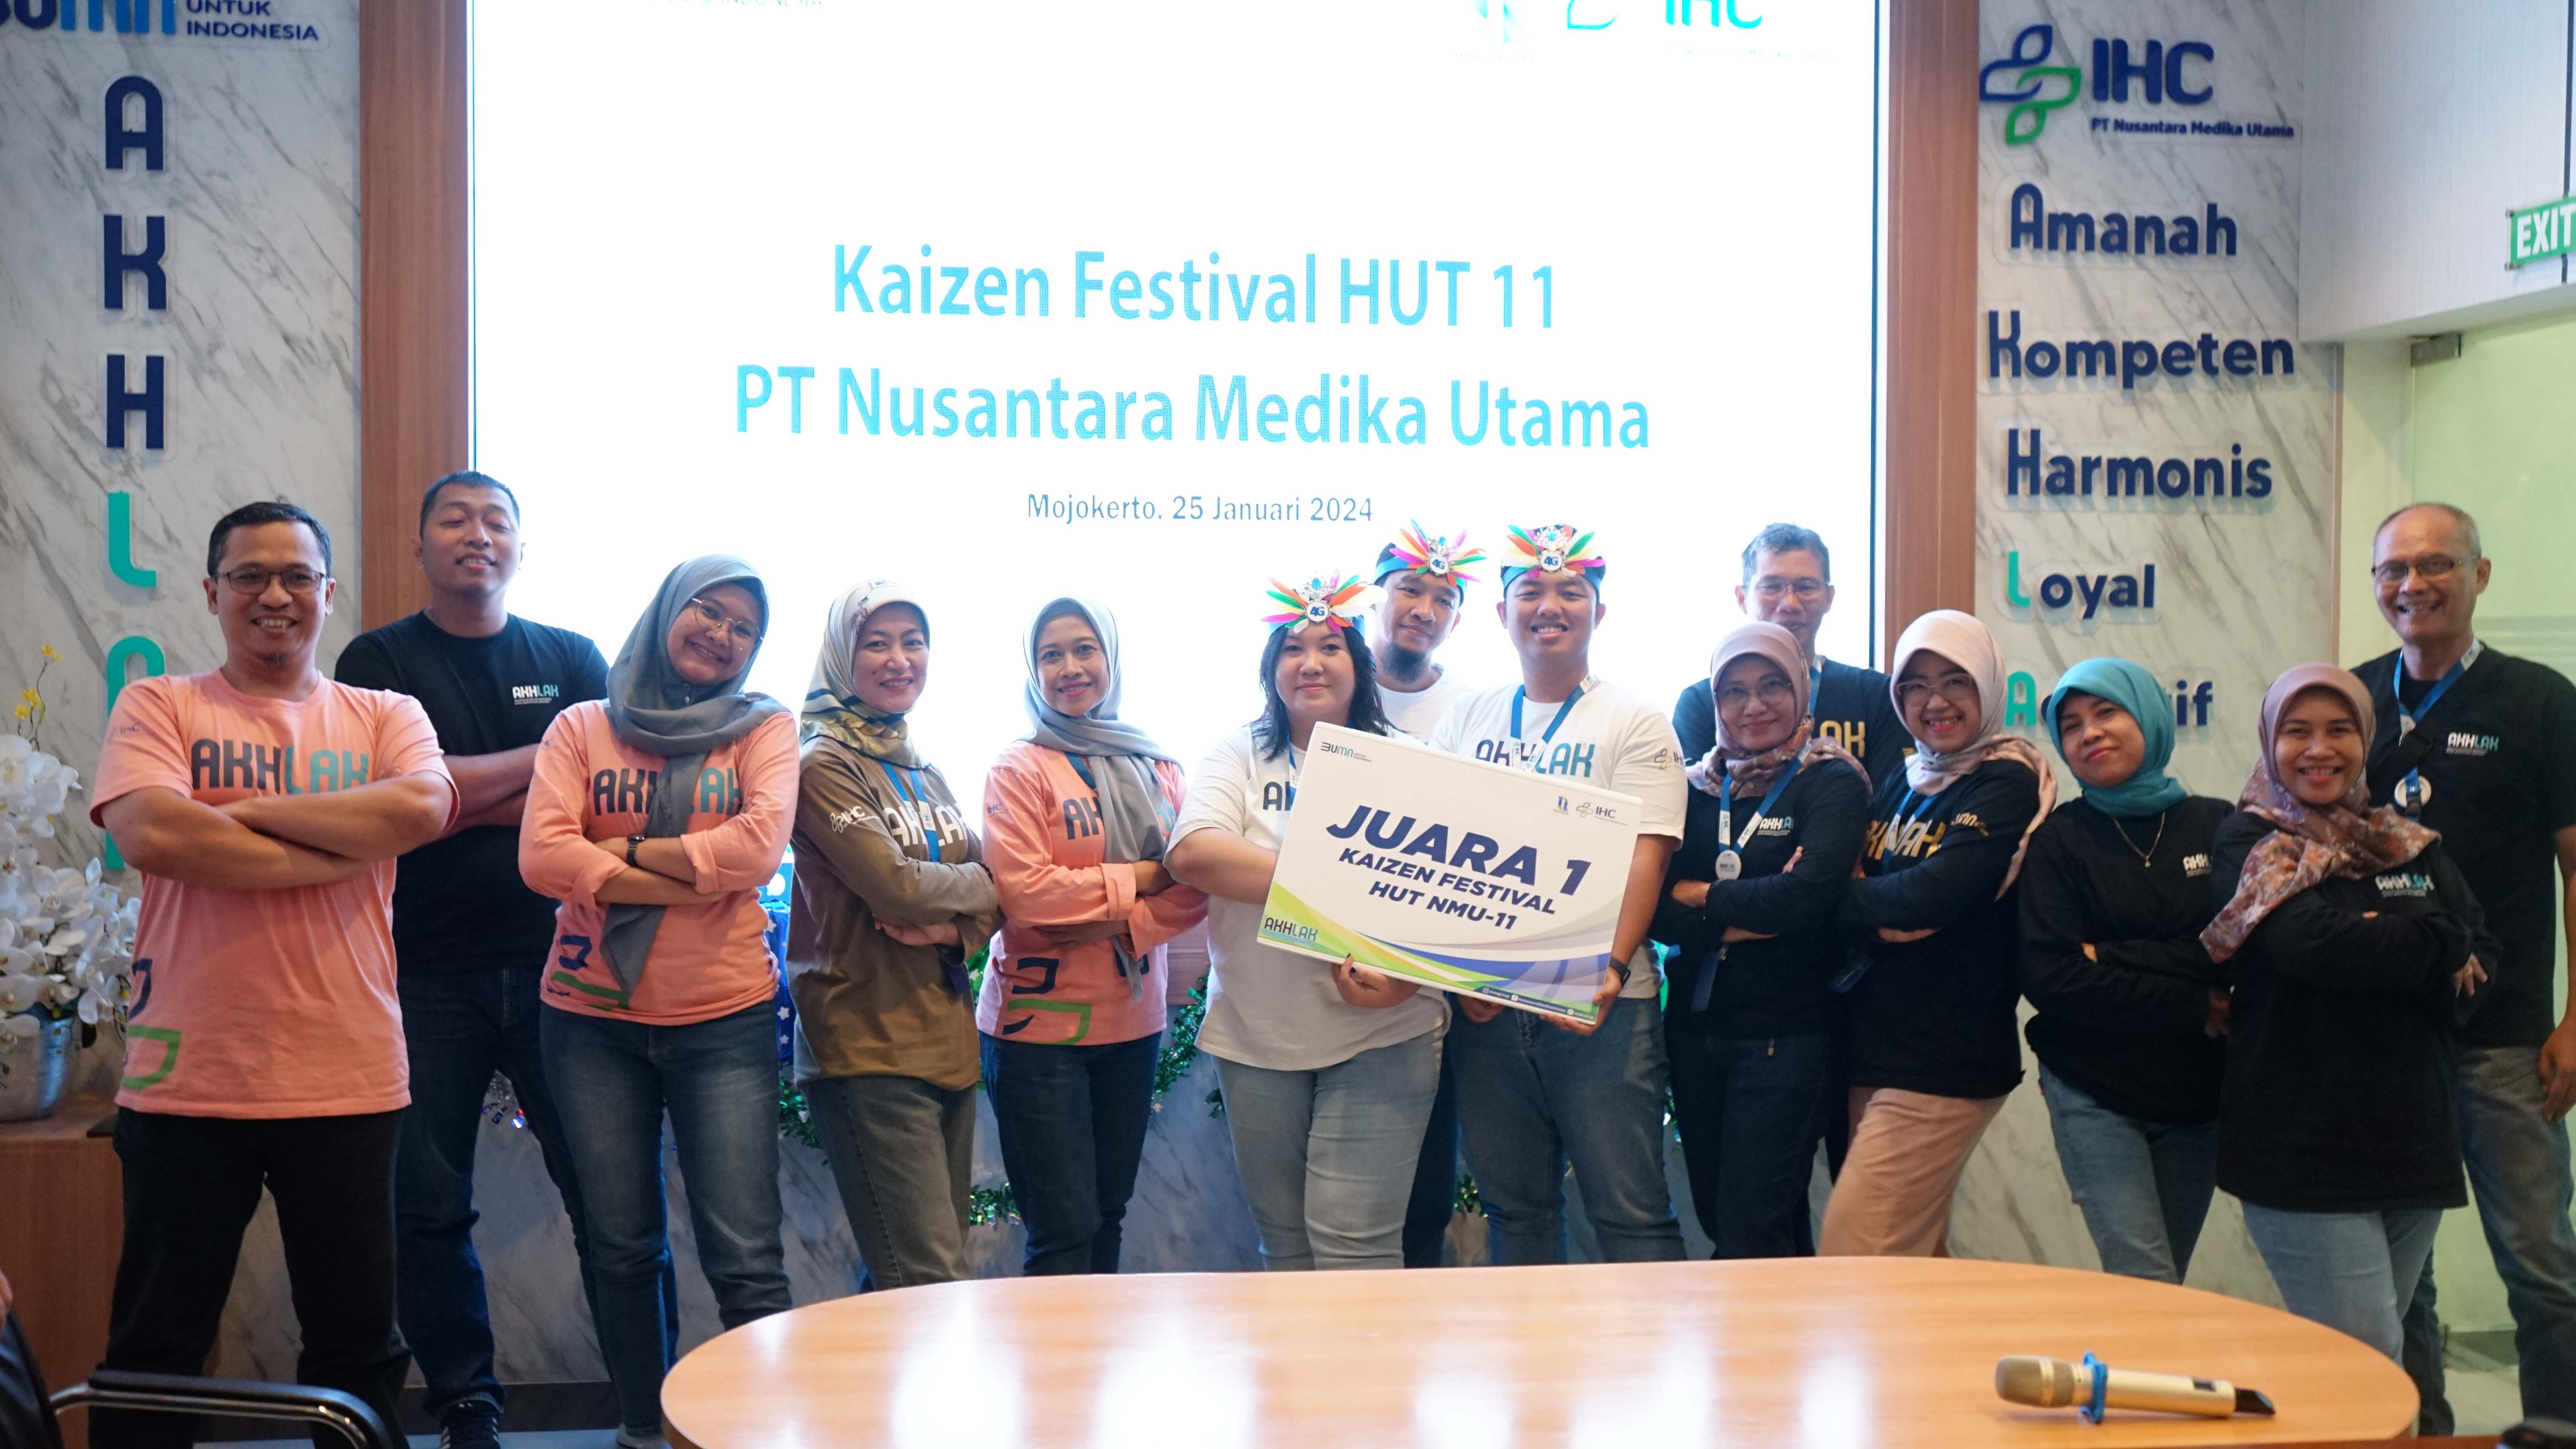 Rumah Sakit Perkebunan Jember Klinik Juara 1 Kaizen Festival HUT ke-11 PT Nusantara Medika Utama